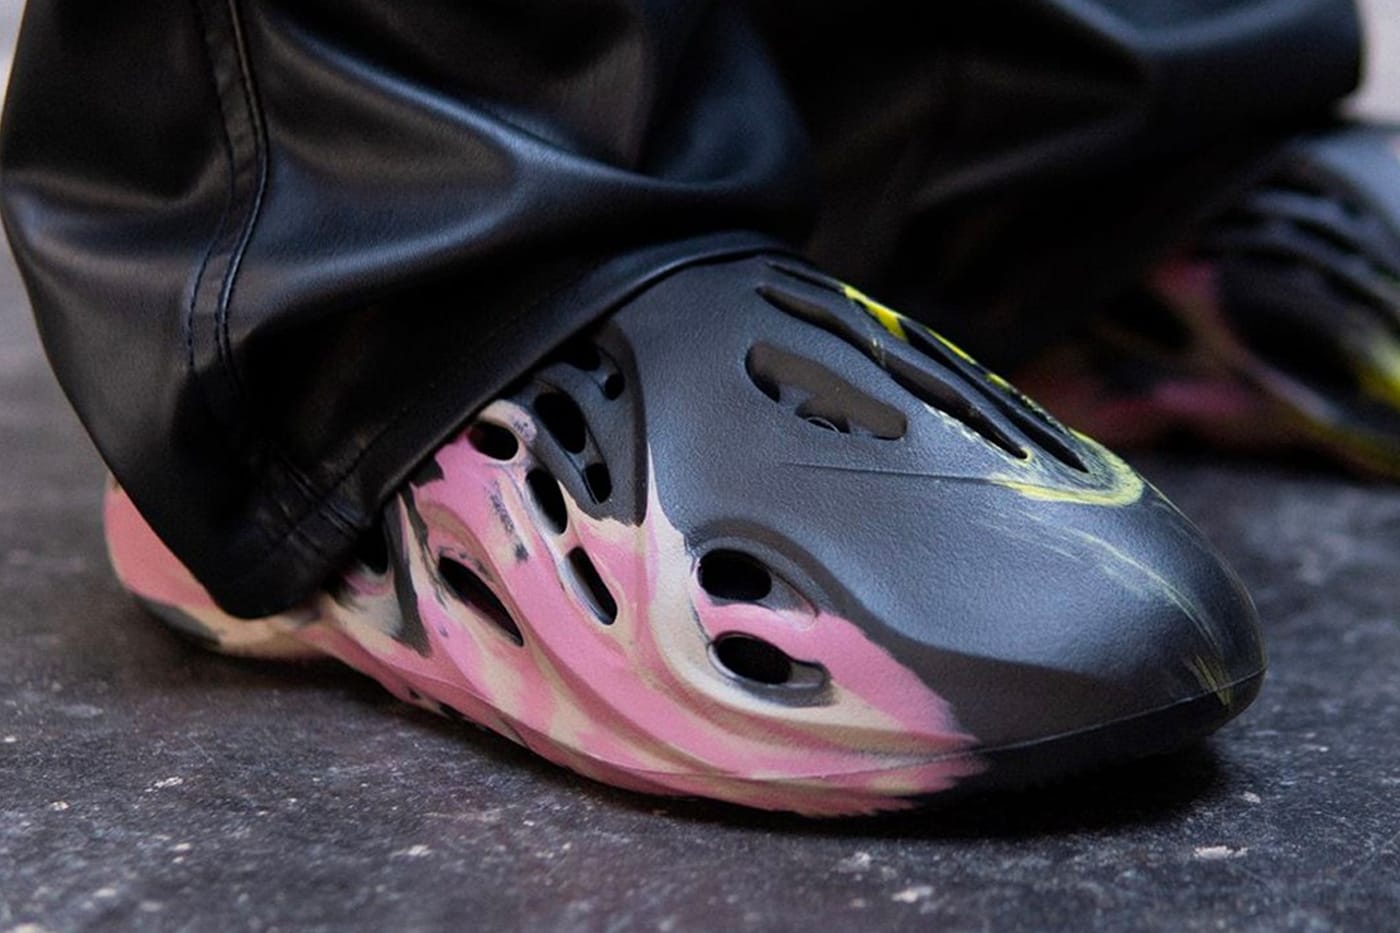 adidas YEEZY Foam Runner "MX Carbon" On Foot Look   Hypebeast